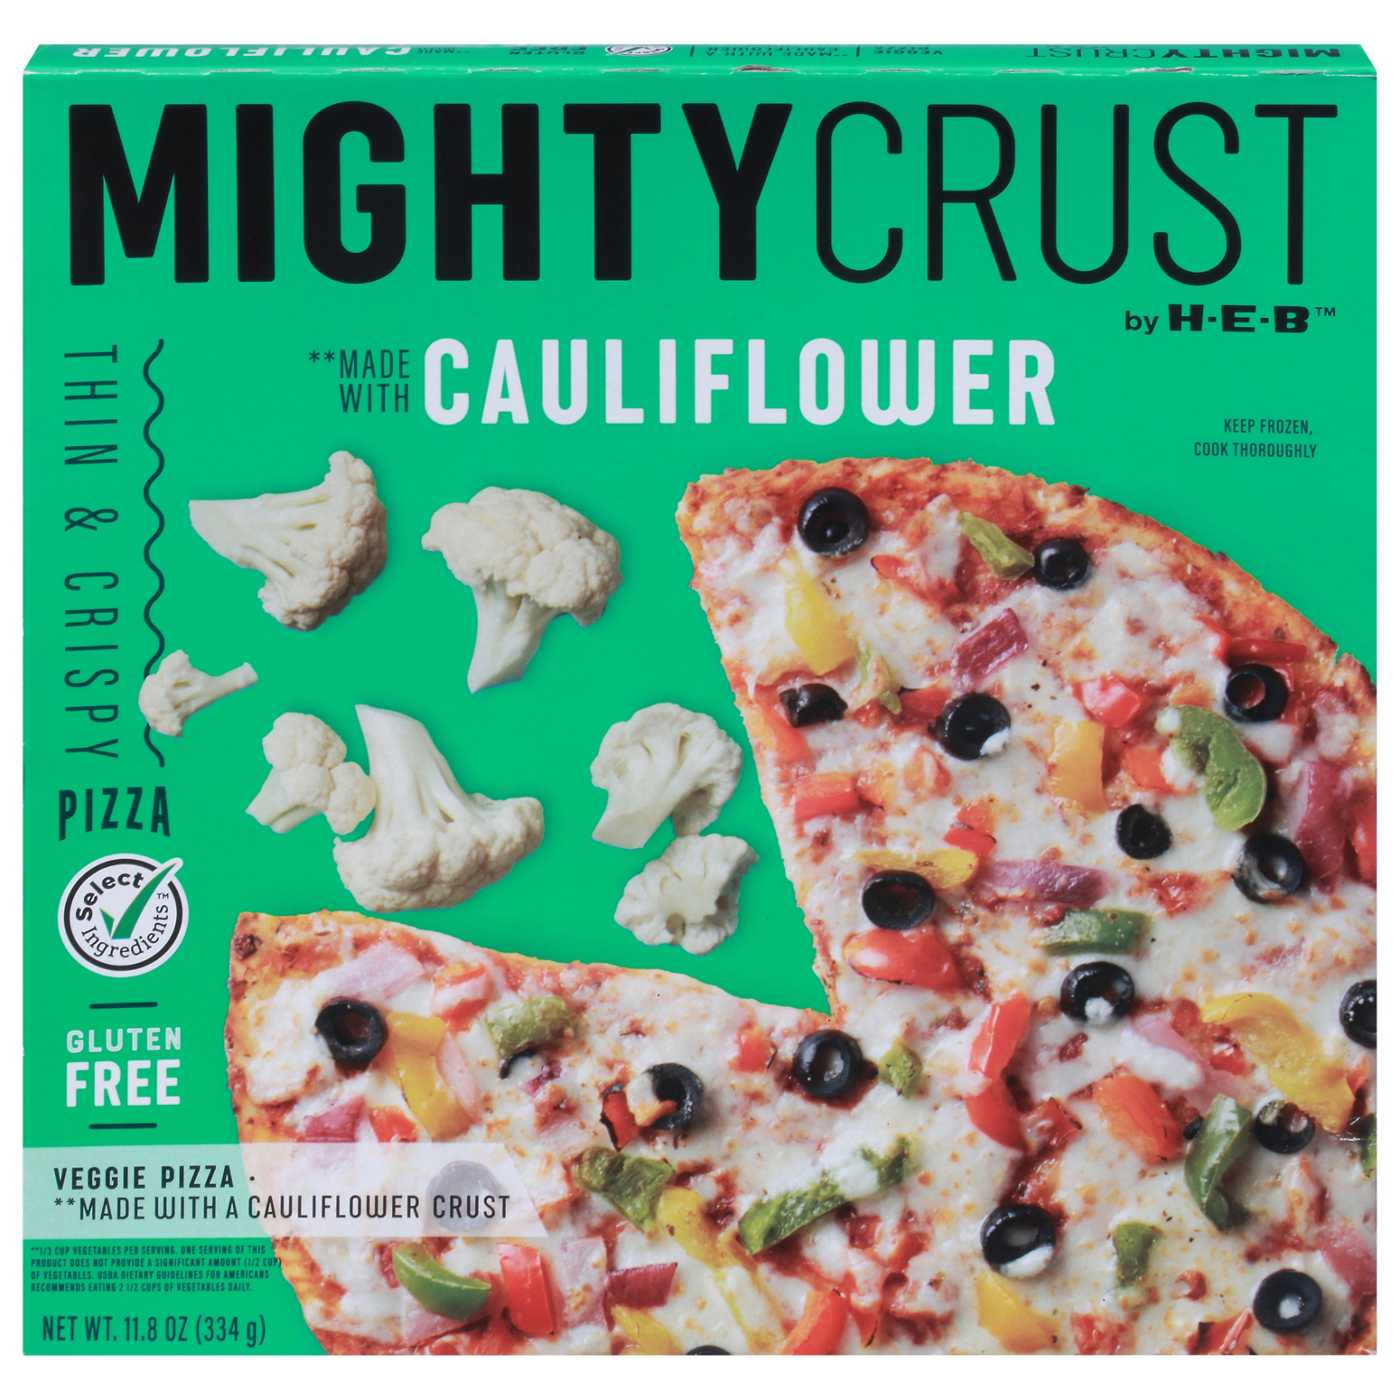 MightyCrust by H-E-B Frozen Cauliflower Pizza - Veggie; image 1 of 4